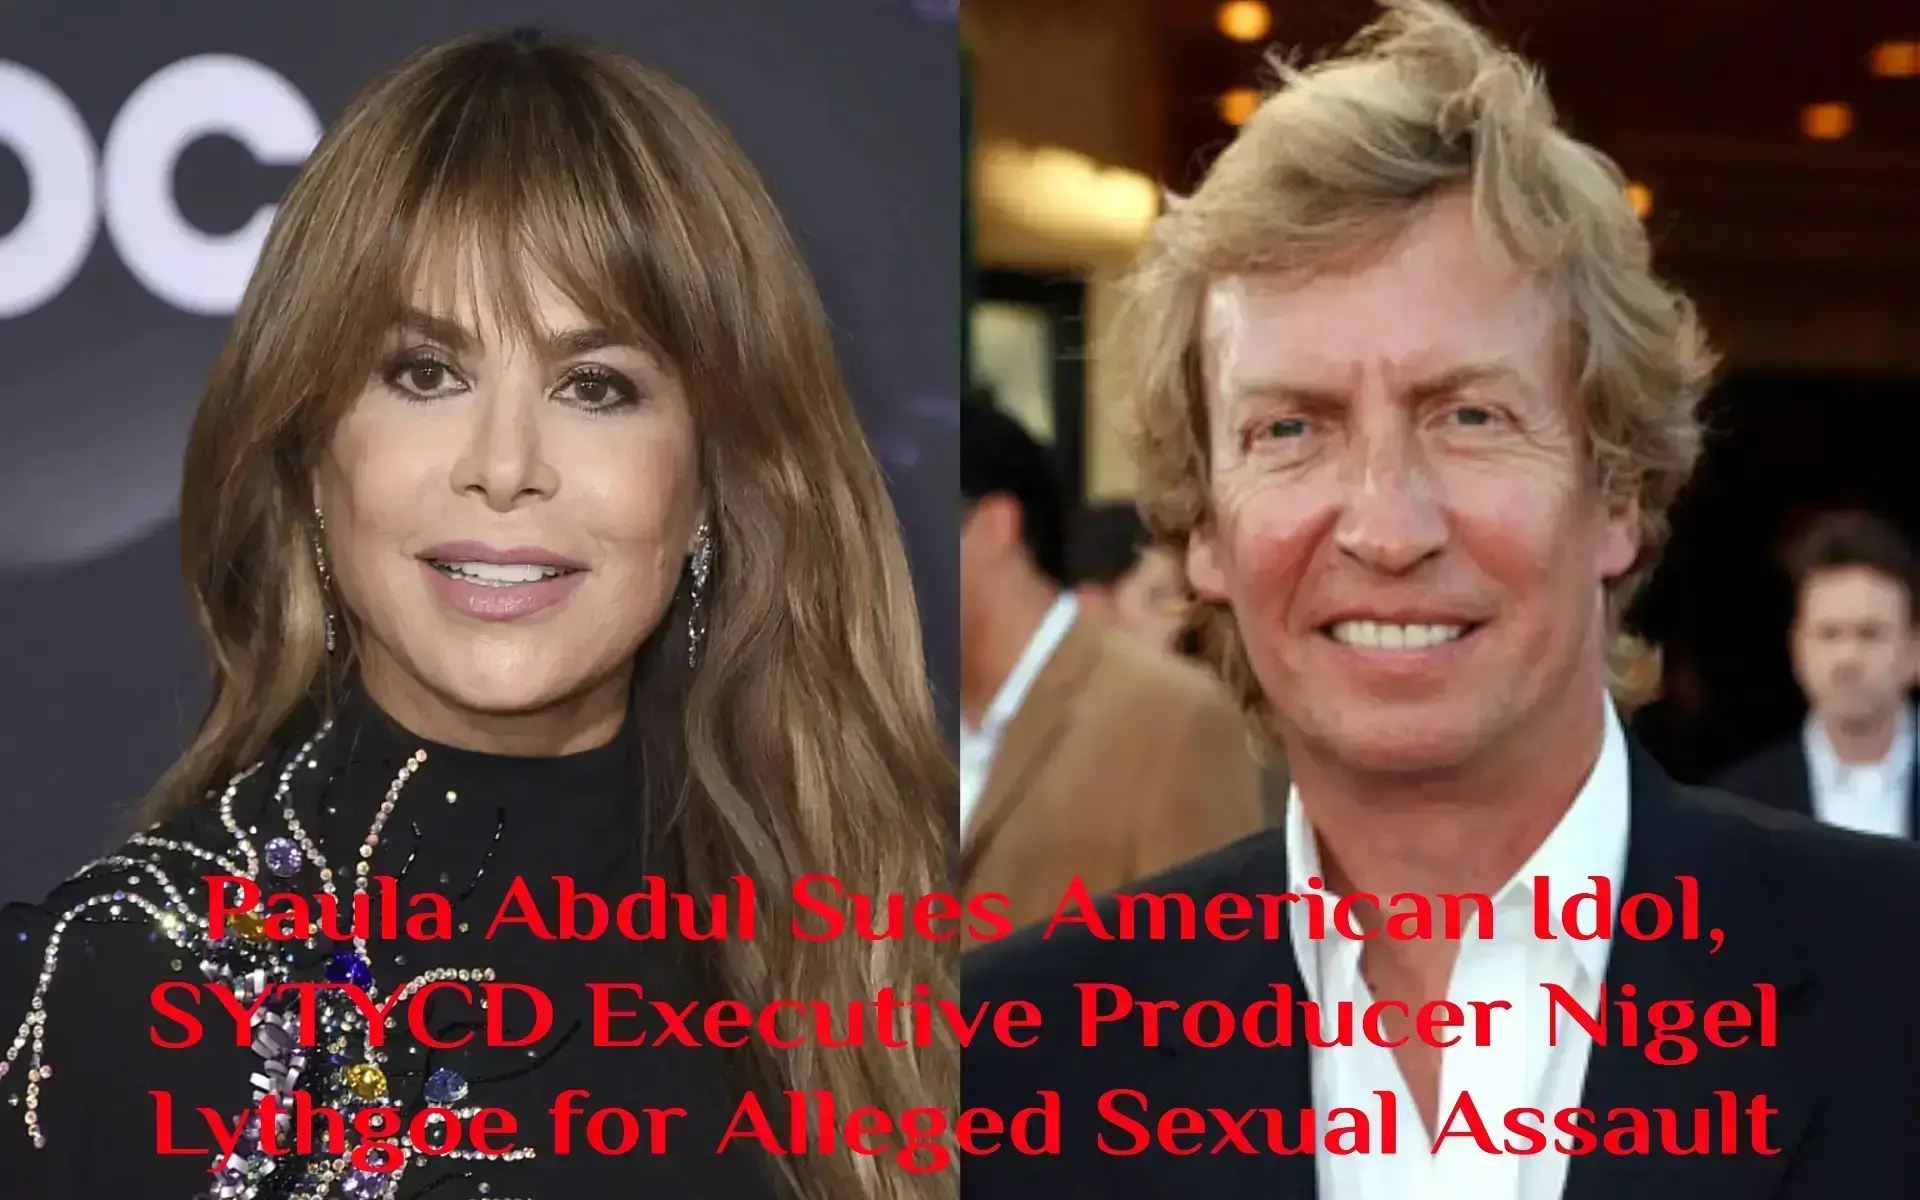 Paula Abdul sues American Idol producer Nigel Lythgoe for alleged Sexual Harassment